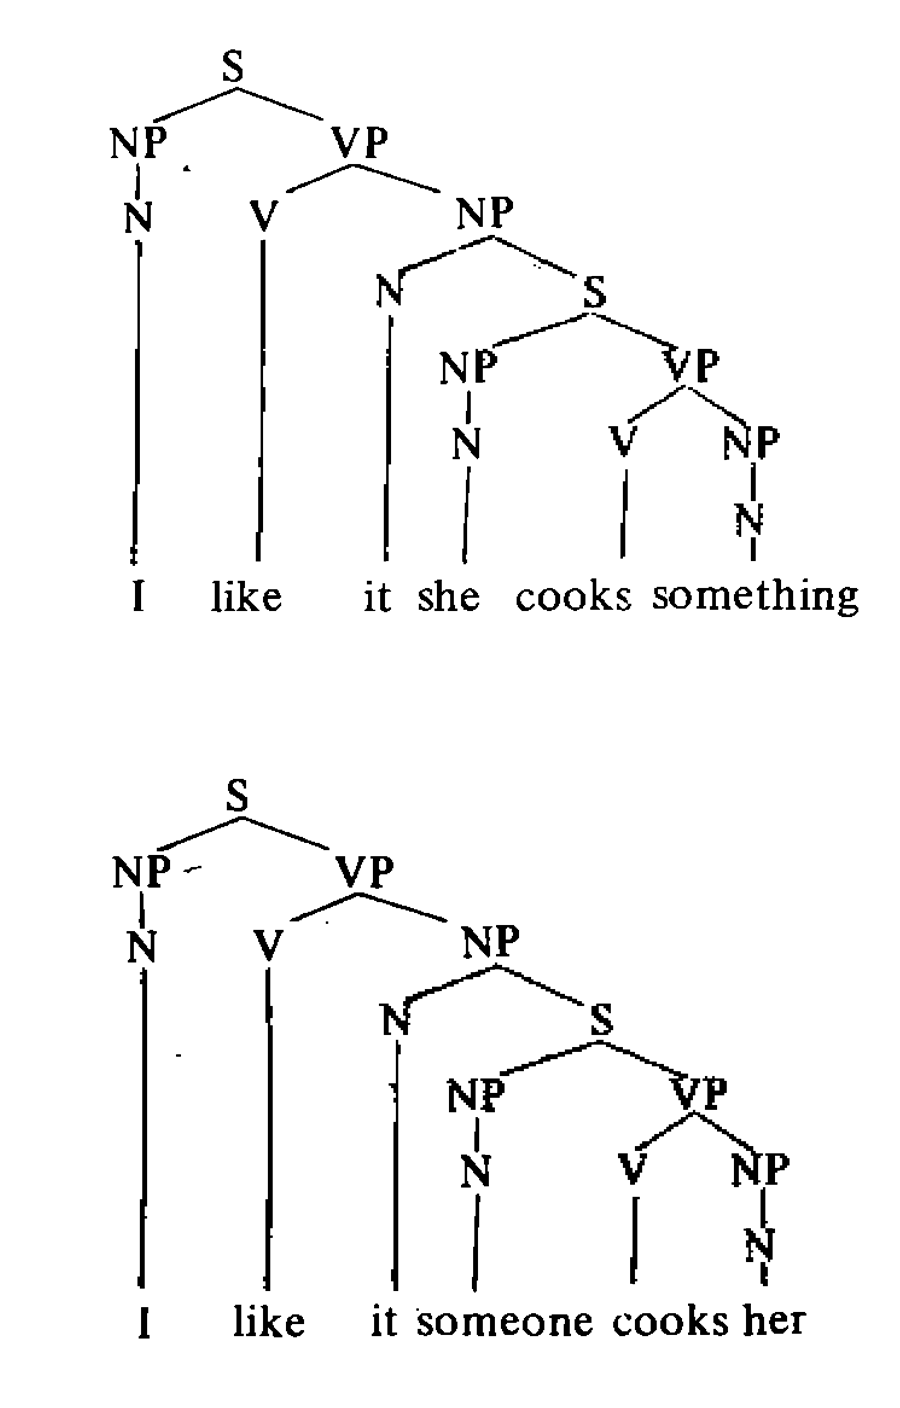 sentence tree diagrams